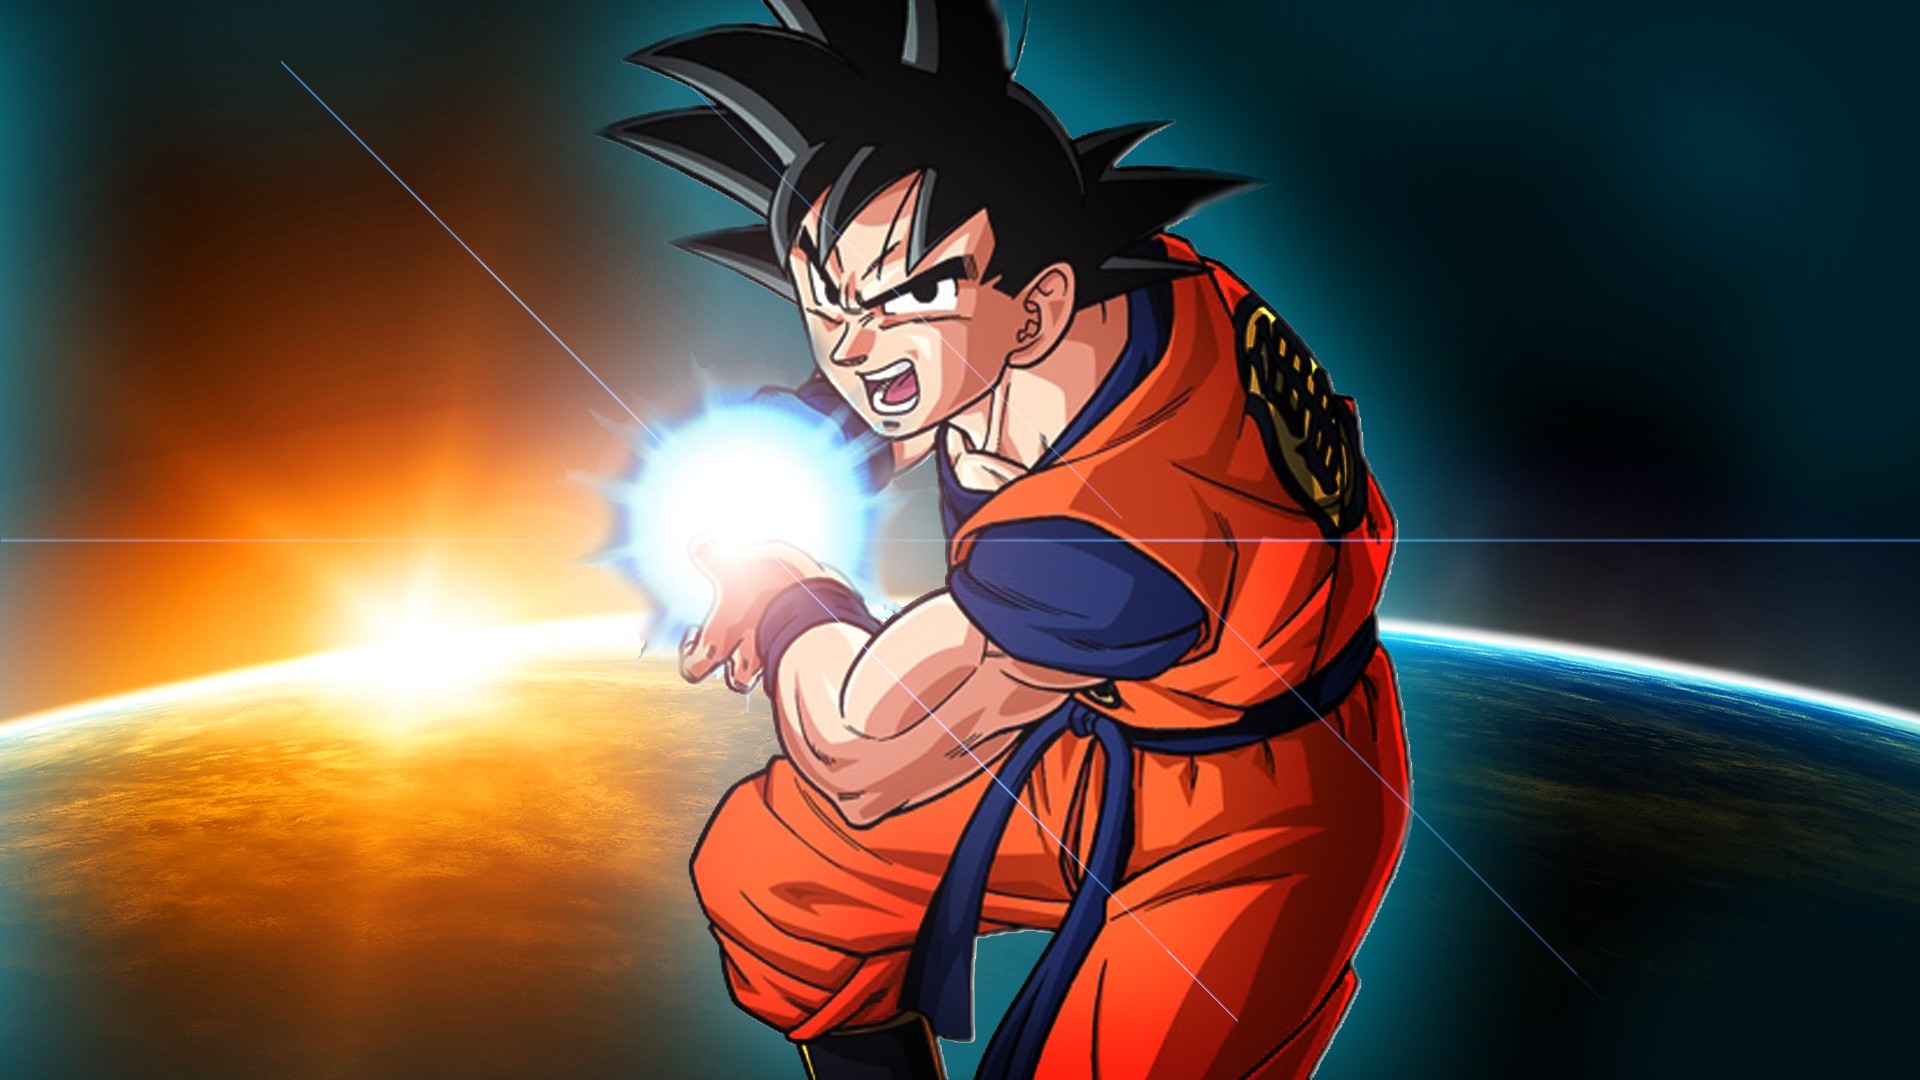 Download 50+ Dragon Ball Super Goku Wallpaper Hd terbaru 2019